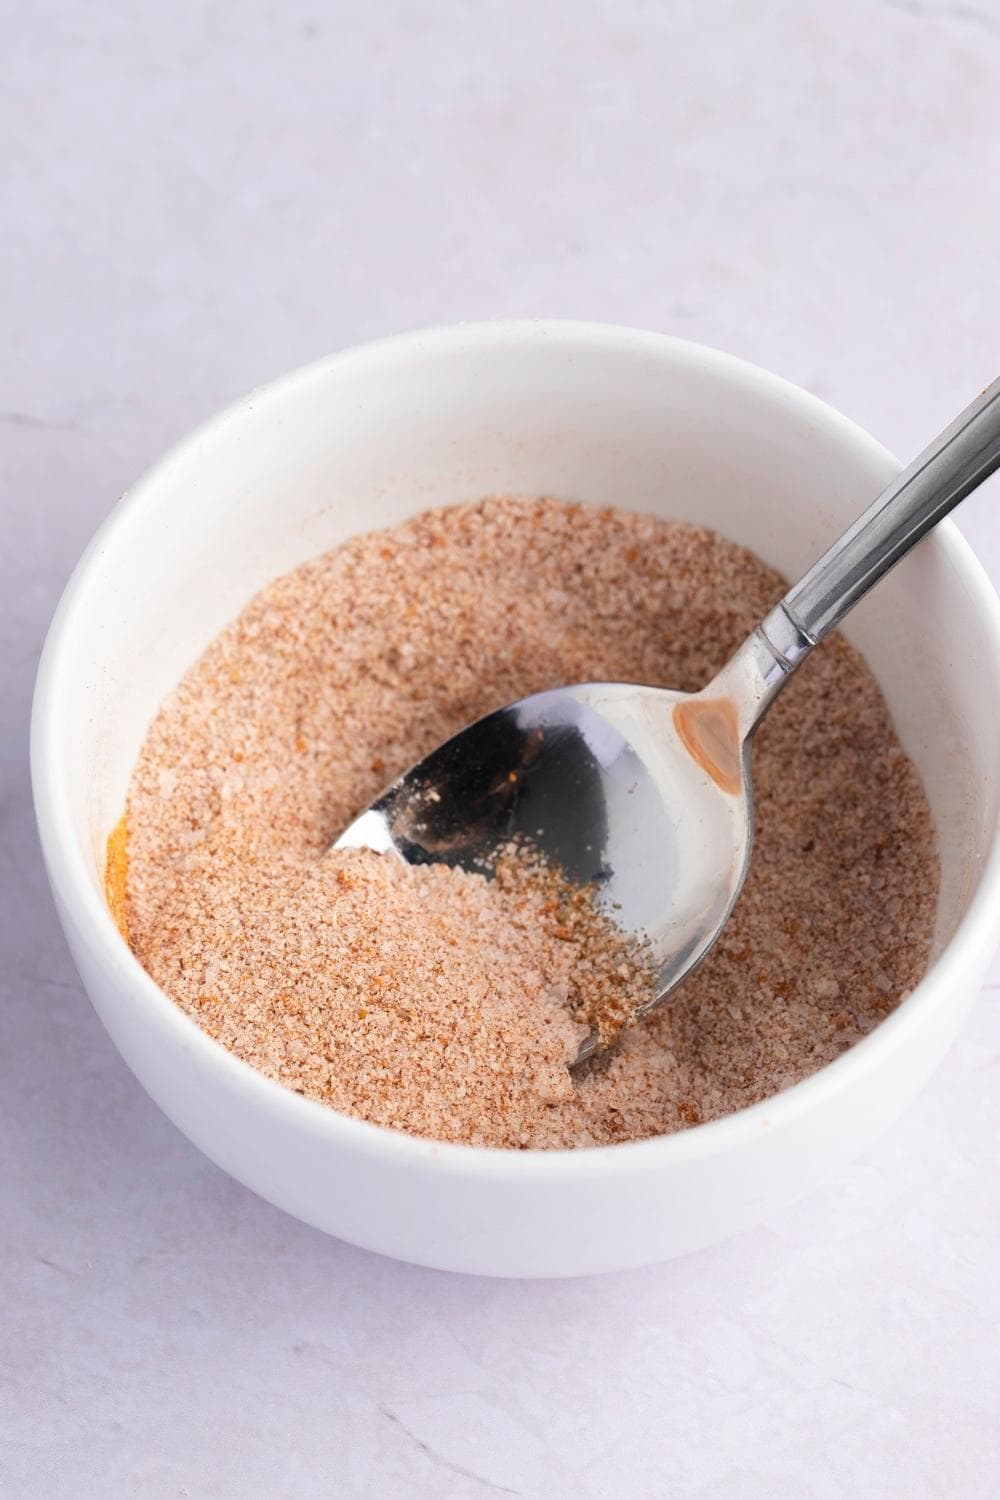 https://insanelygoodrecipes.com/wp-content/uploads/2022/10/Lawrys-Seasoned-Salt-Mixed-With-Spoon.jpg